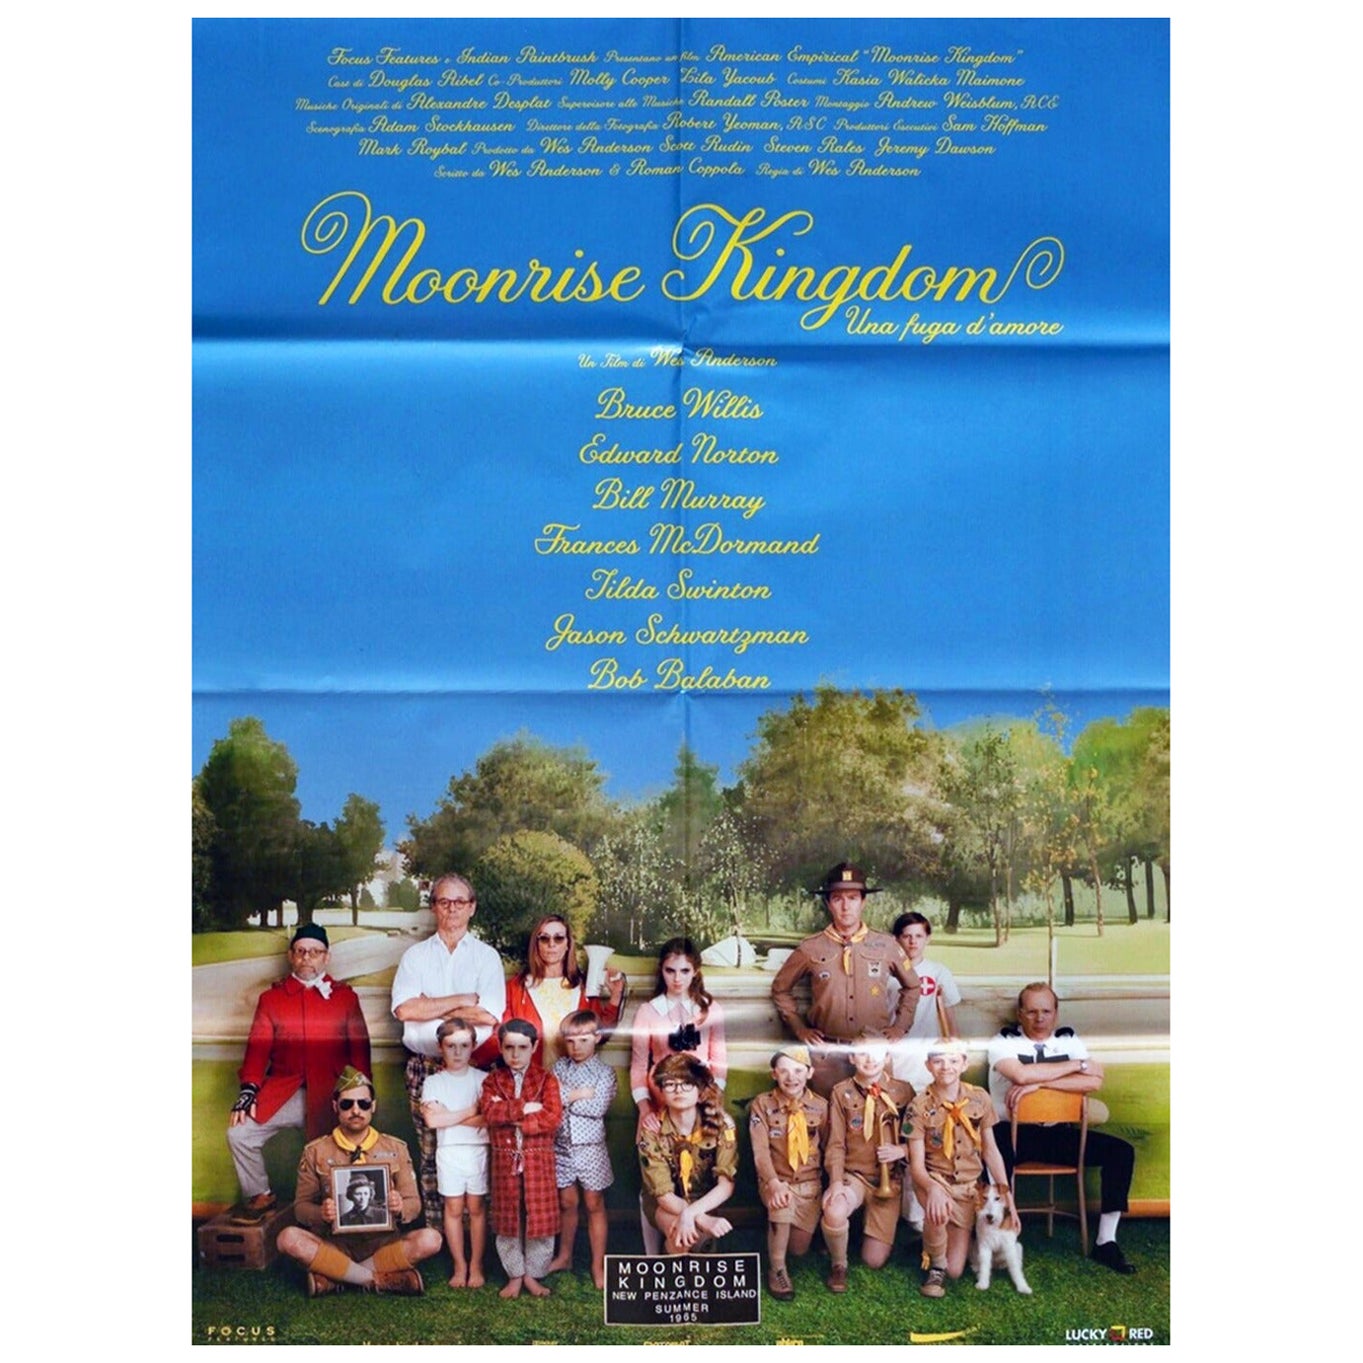 2012 Moonrise Kingdom (Italian) Original Vintage Poster For Sale